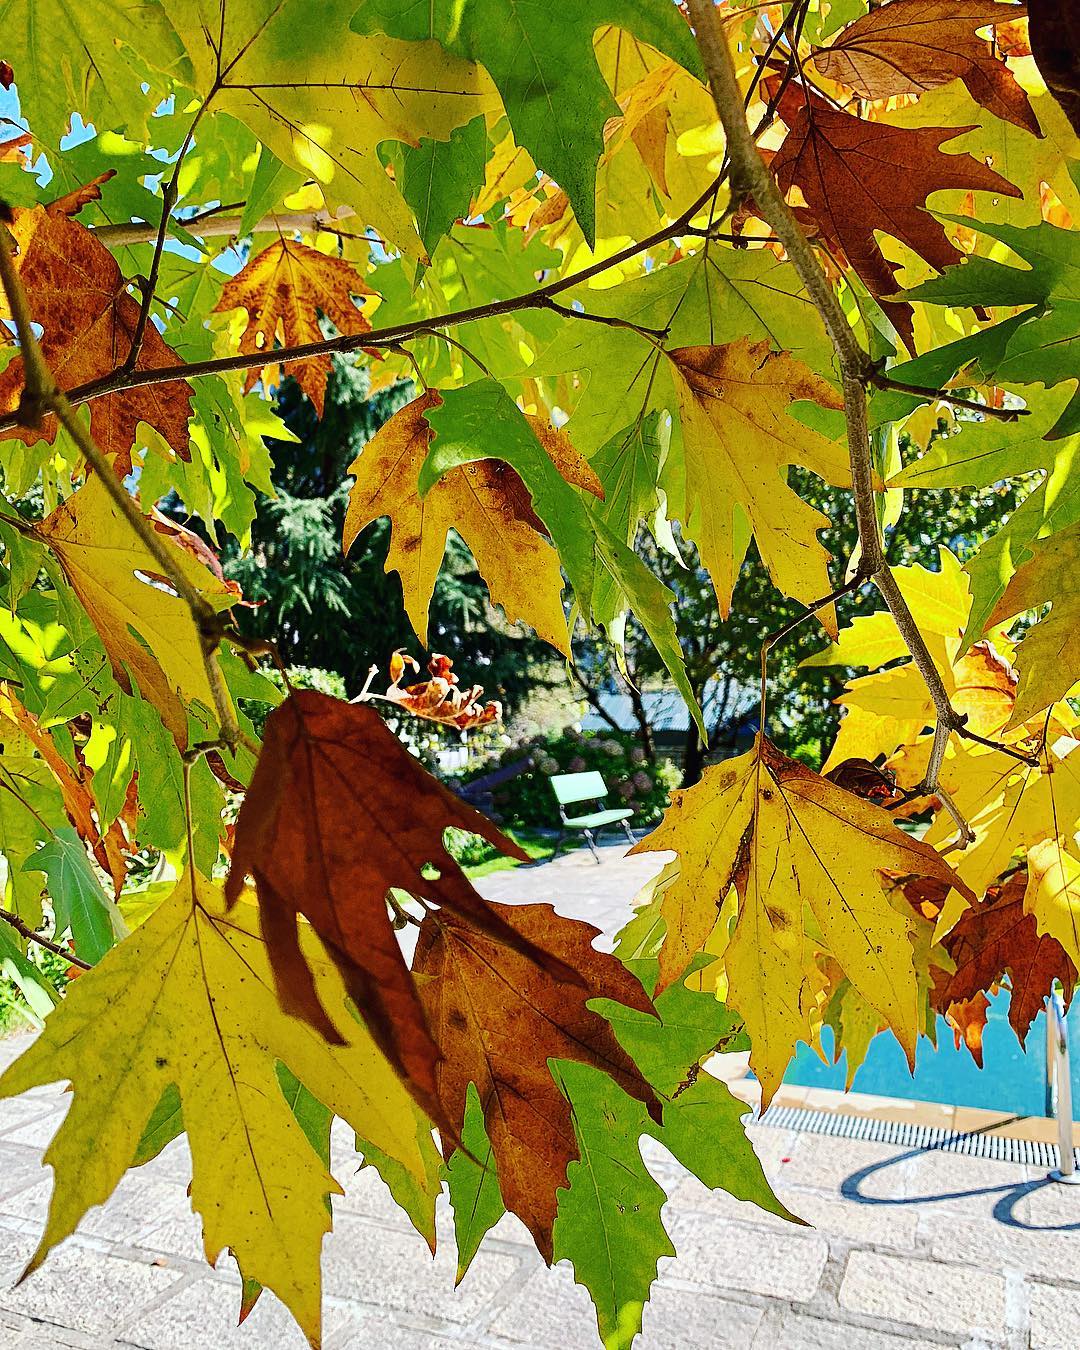 68+] Autumn Leaves Background - WallpaperSafari